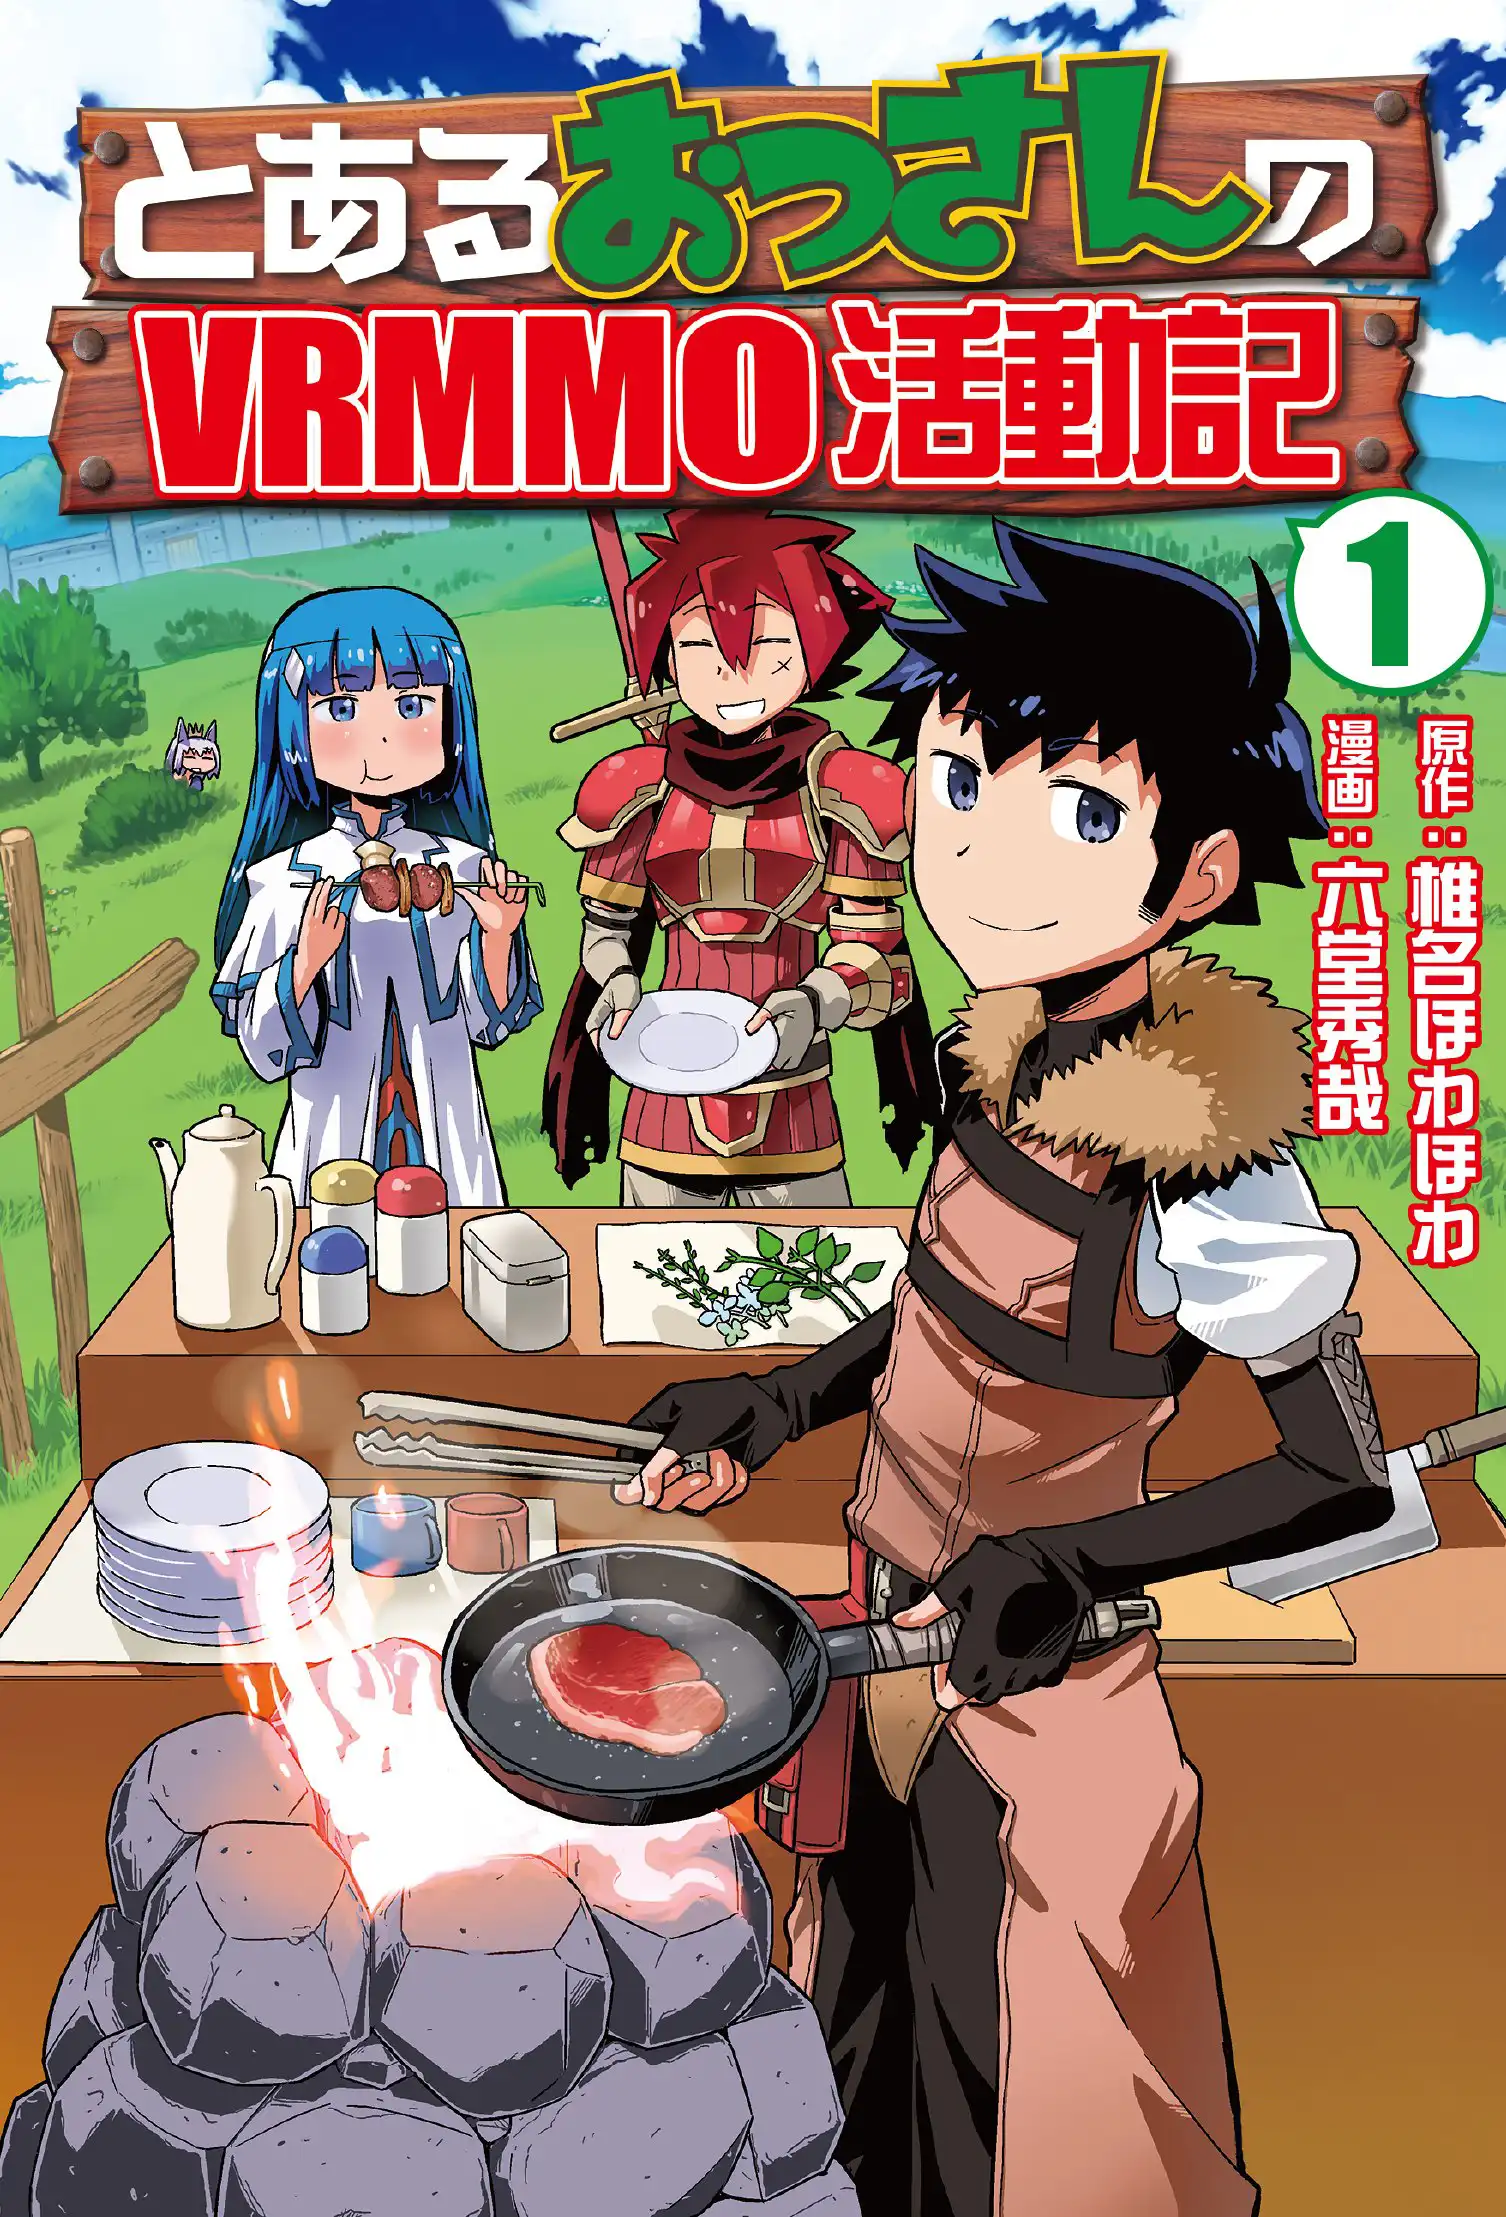 A Playthrough of a Certain Dudes VRMMO Life Manga Volume 1